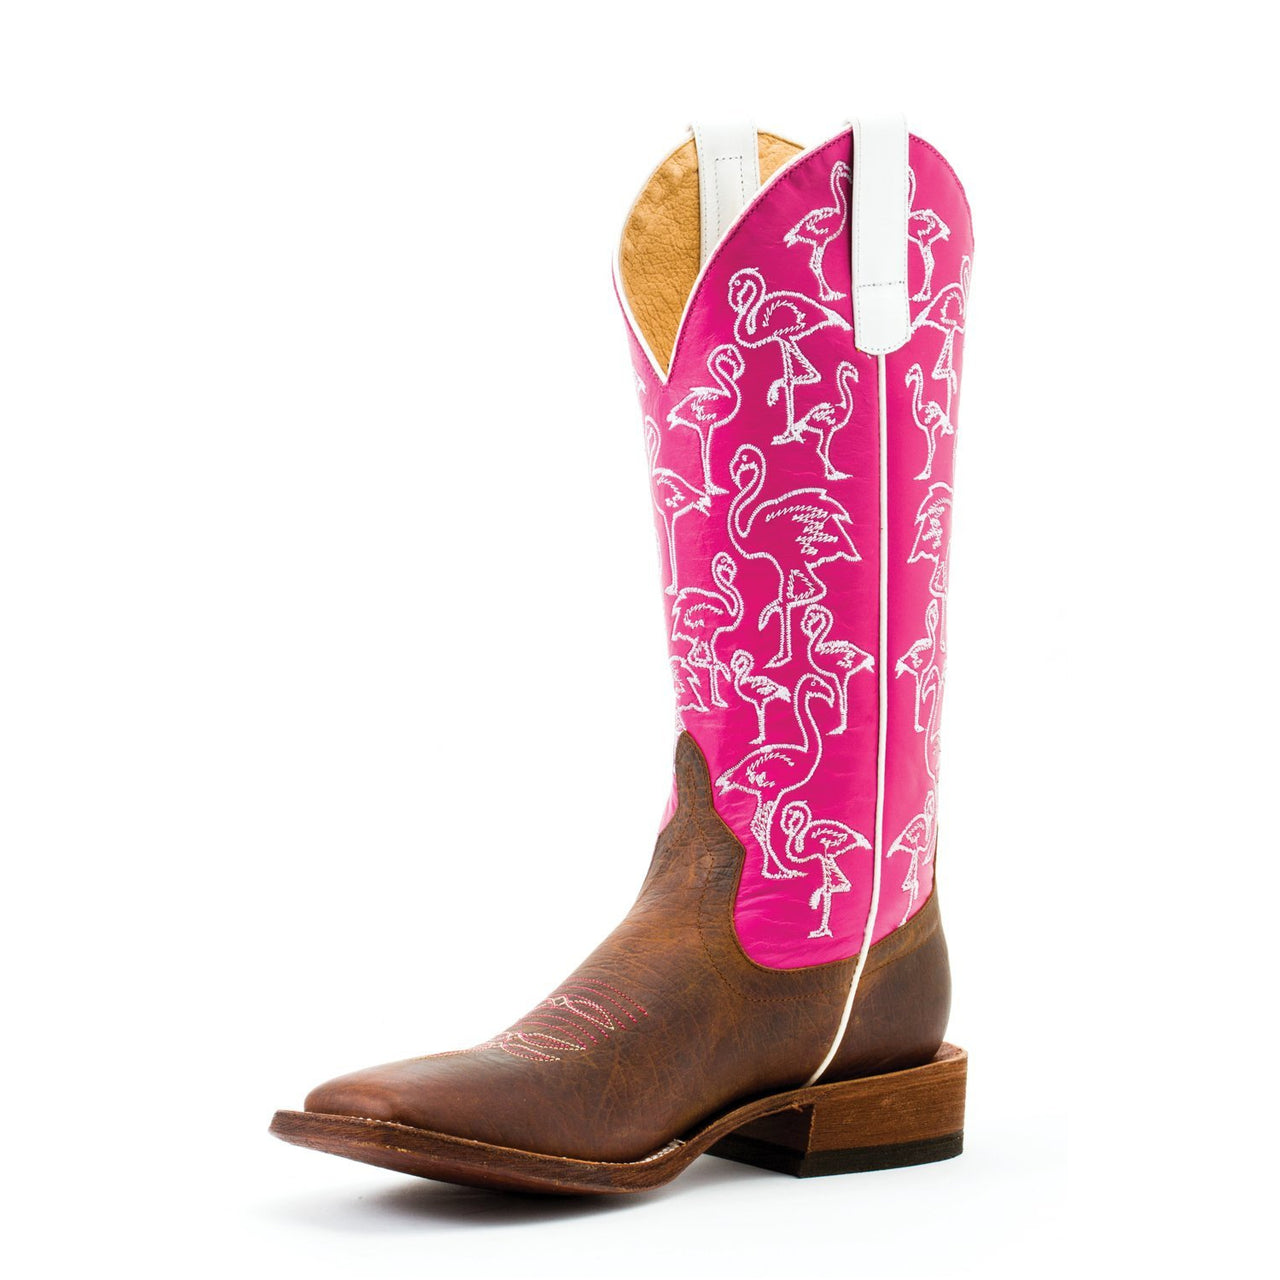 Macie Bean "Let's Flamingle" Ladies Boot